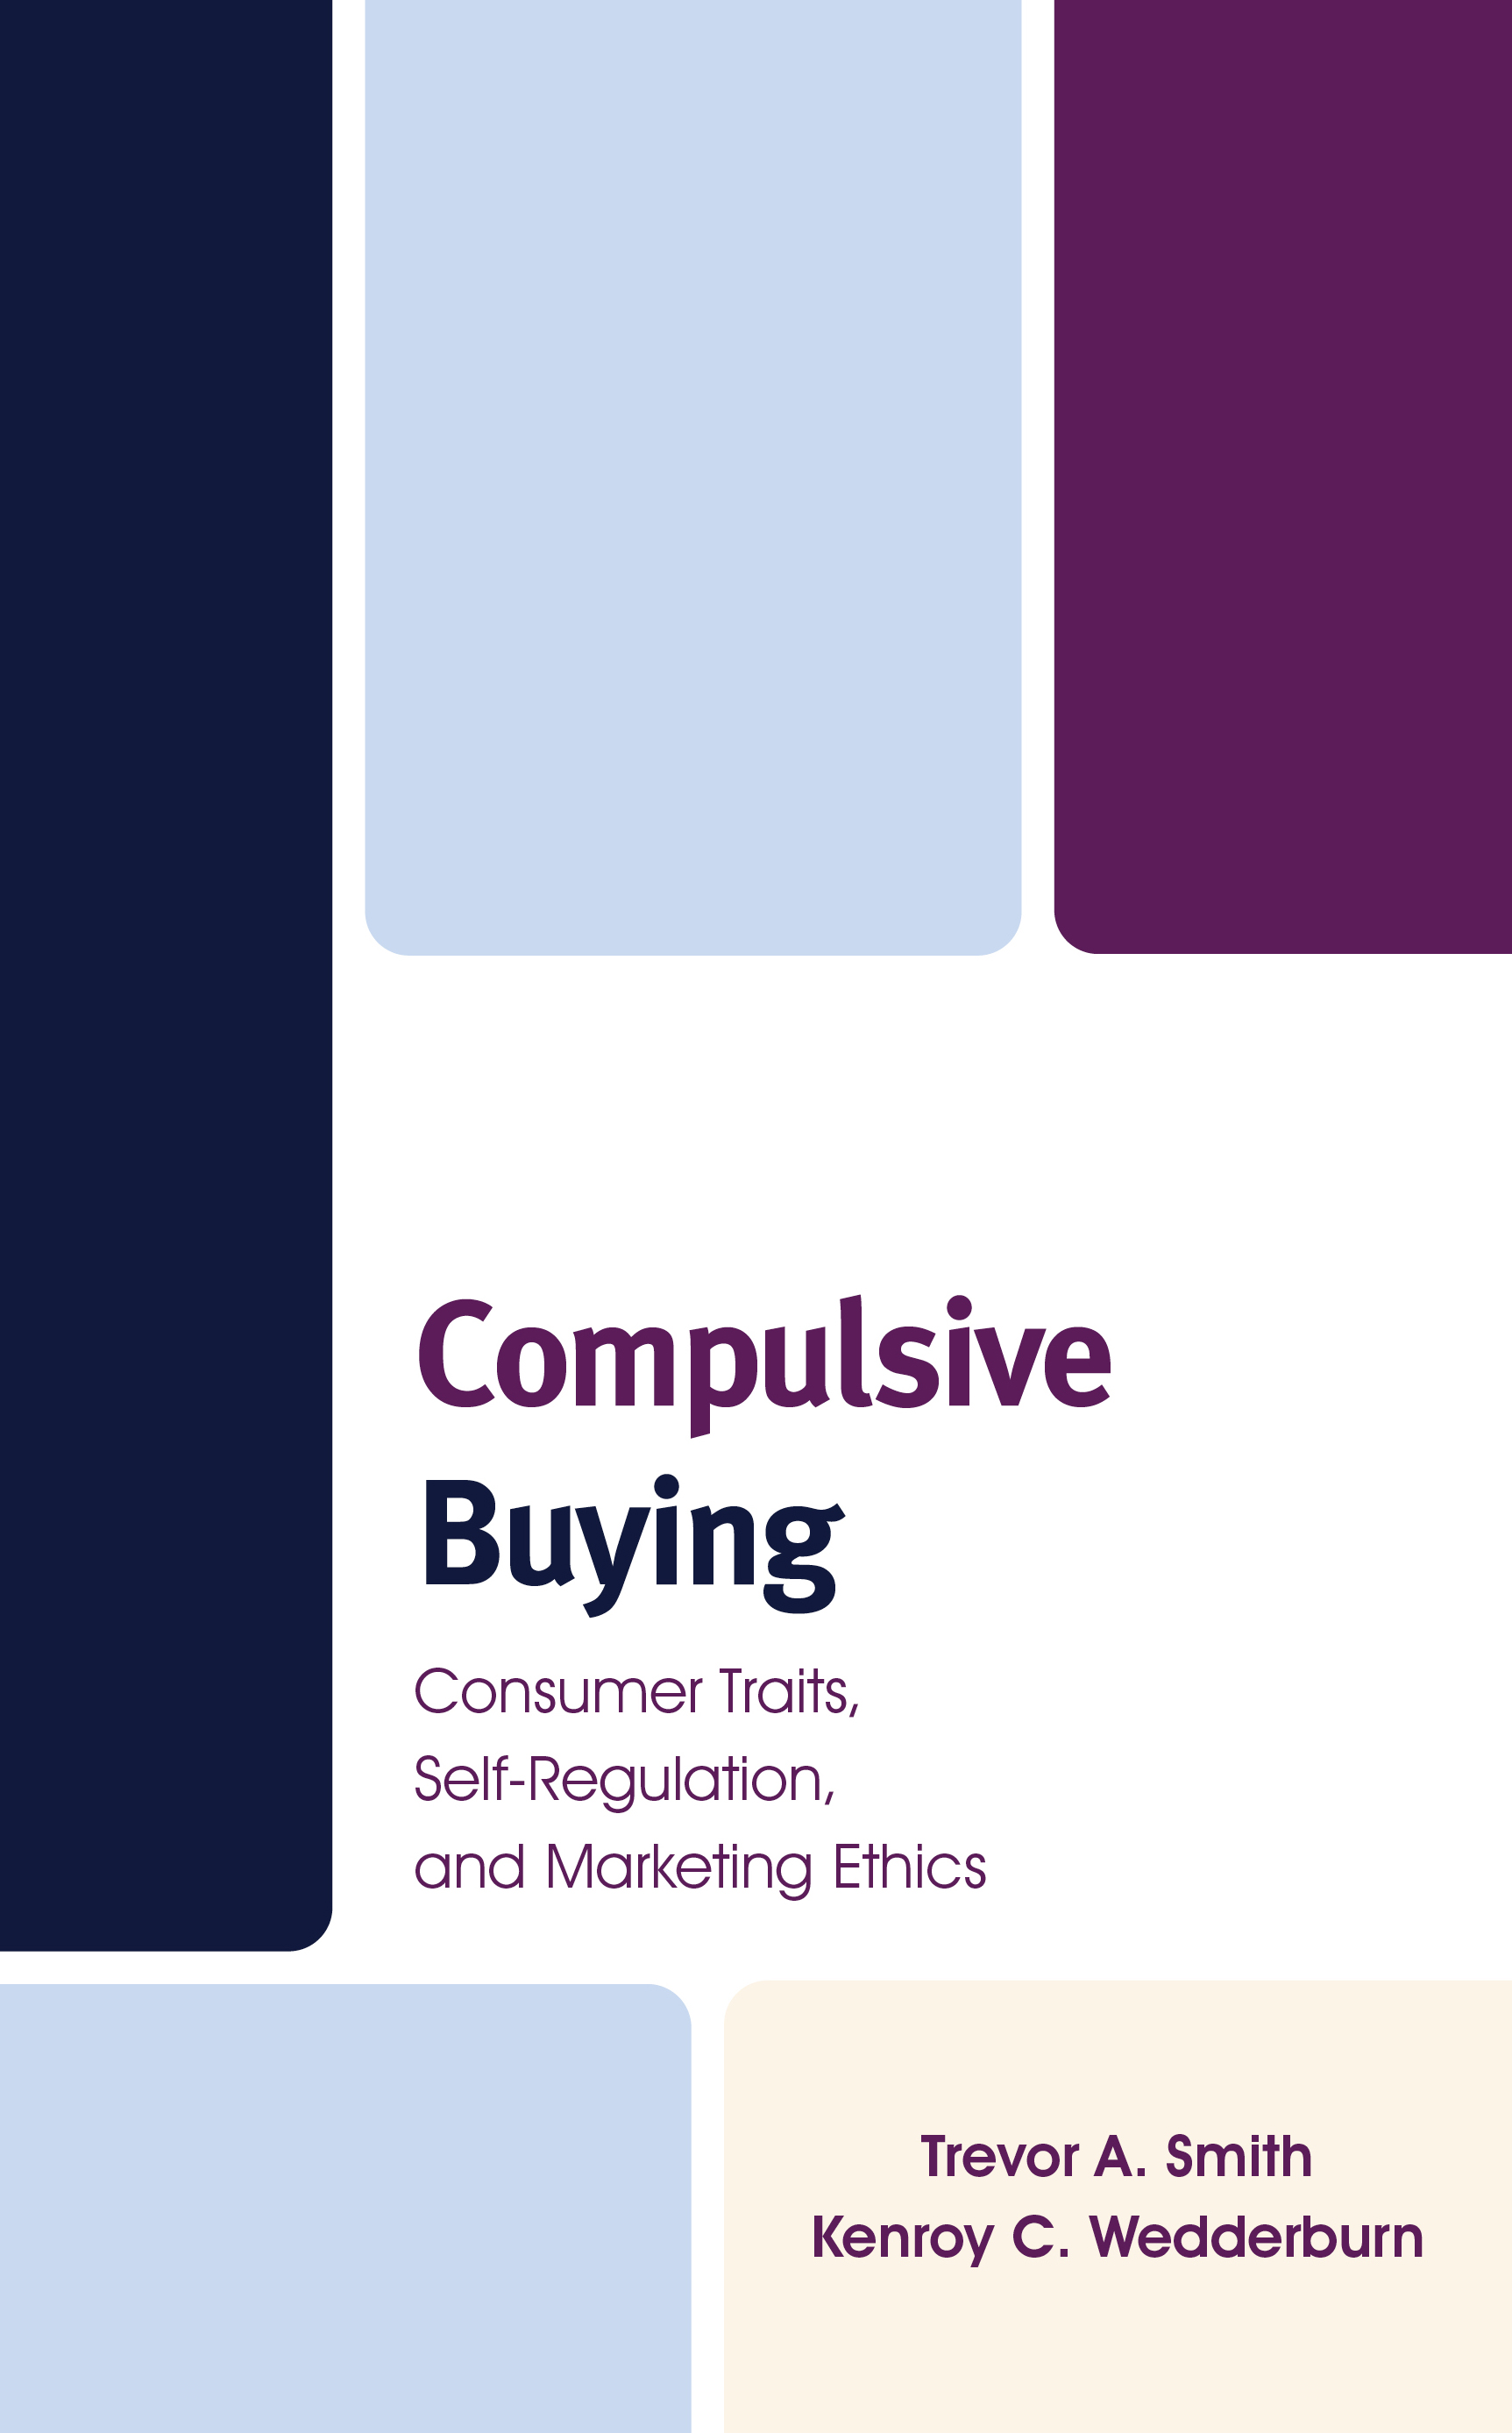 Compulsive Buying: Consumer Traits, Self-Regulation, and Marketing Ethics